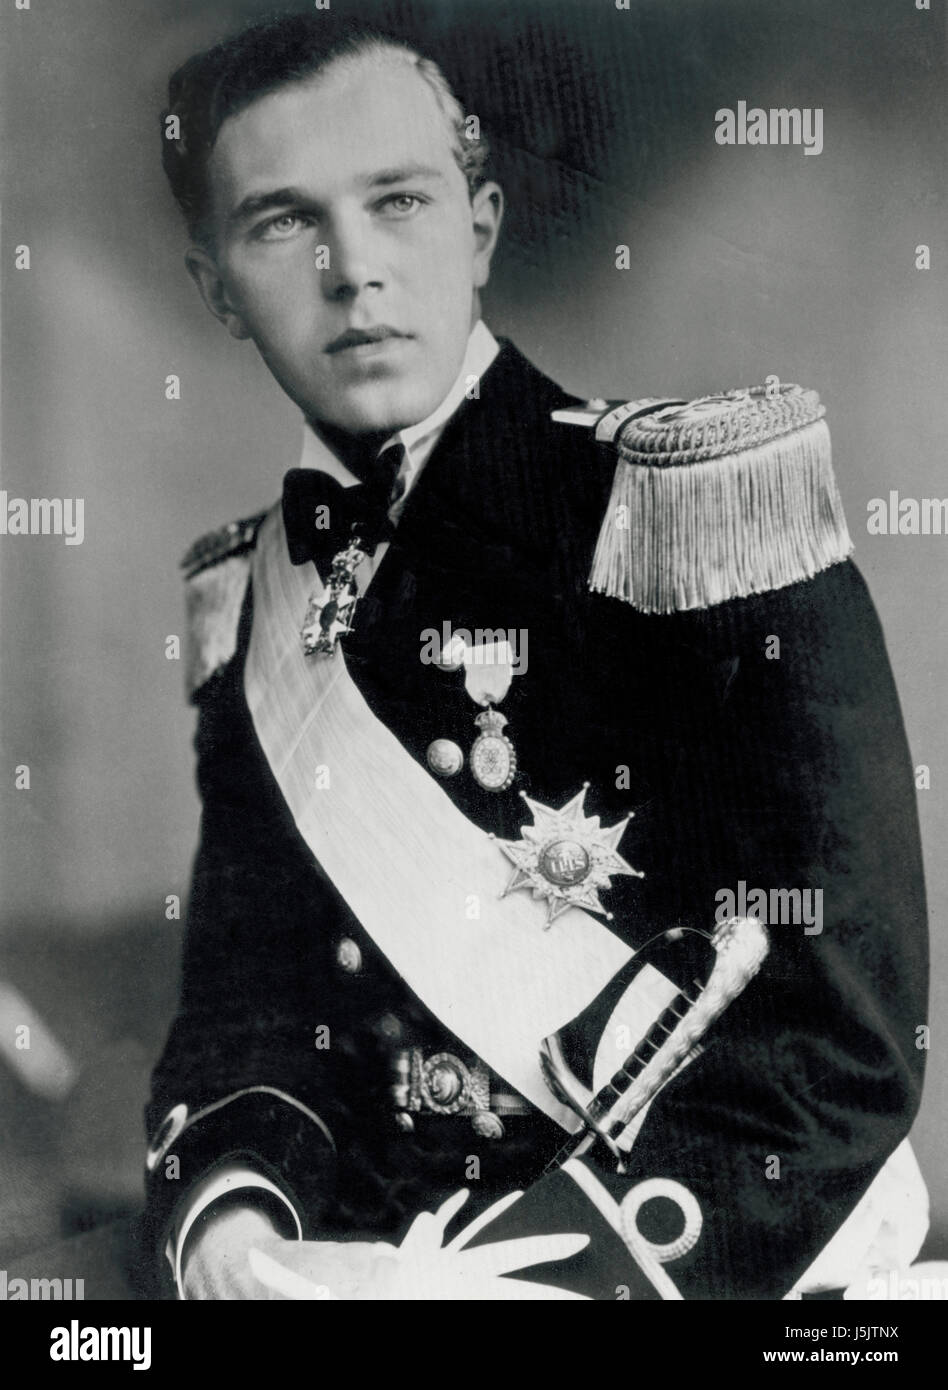 Prince Bertil of Sweden, Duke of Halland (1912-97), Portrait, 1938 Stock  Photo - Alamy